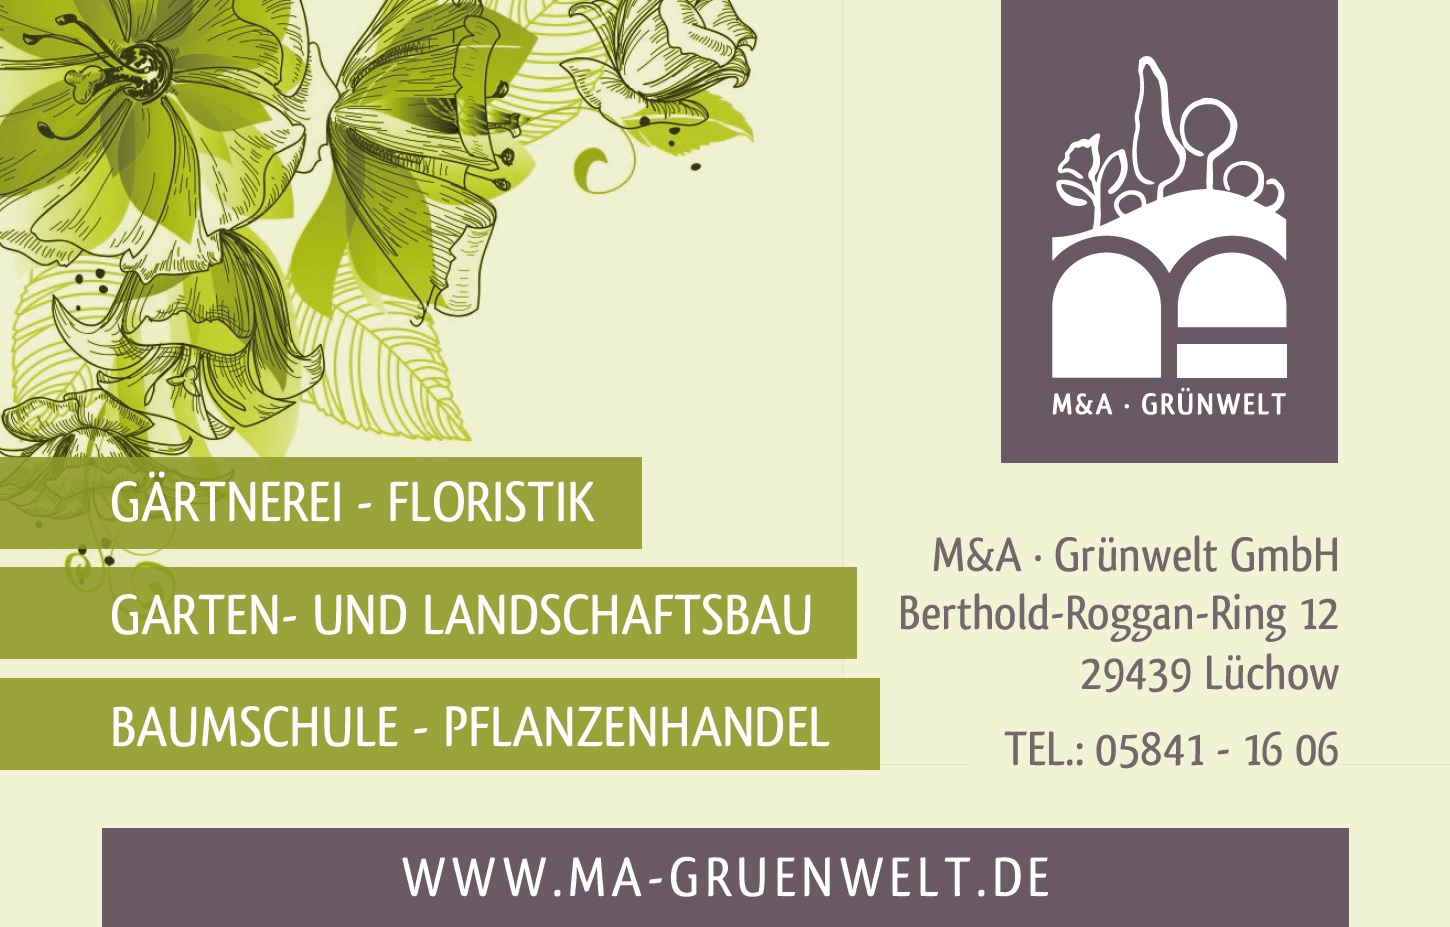 M&A - Grünwelt GmbH